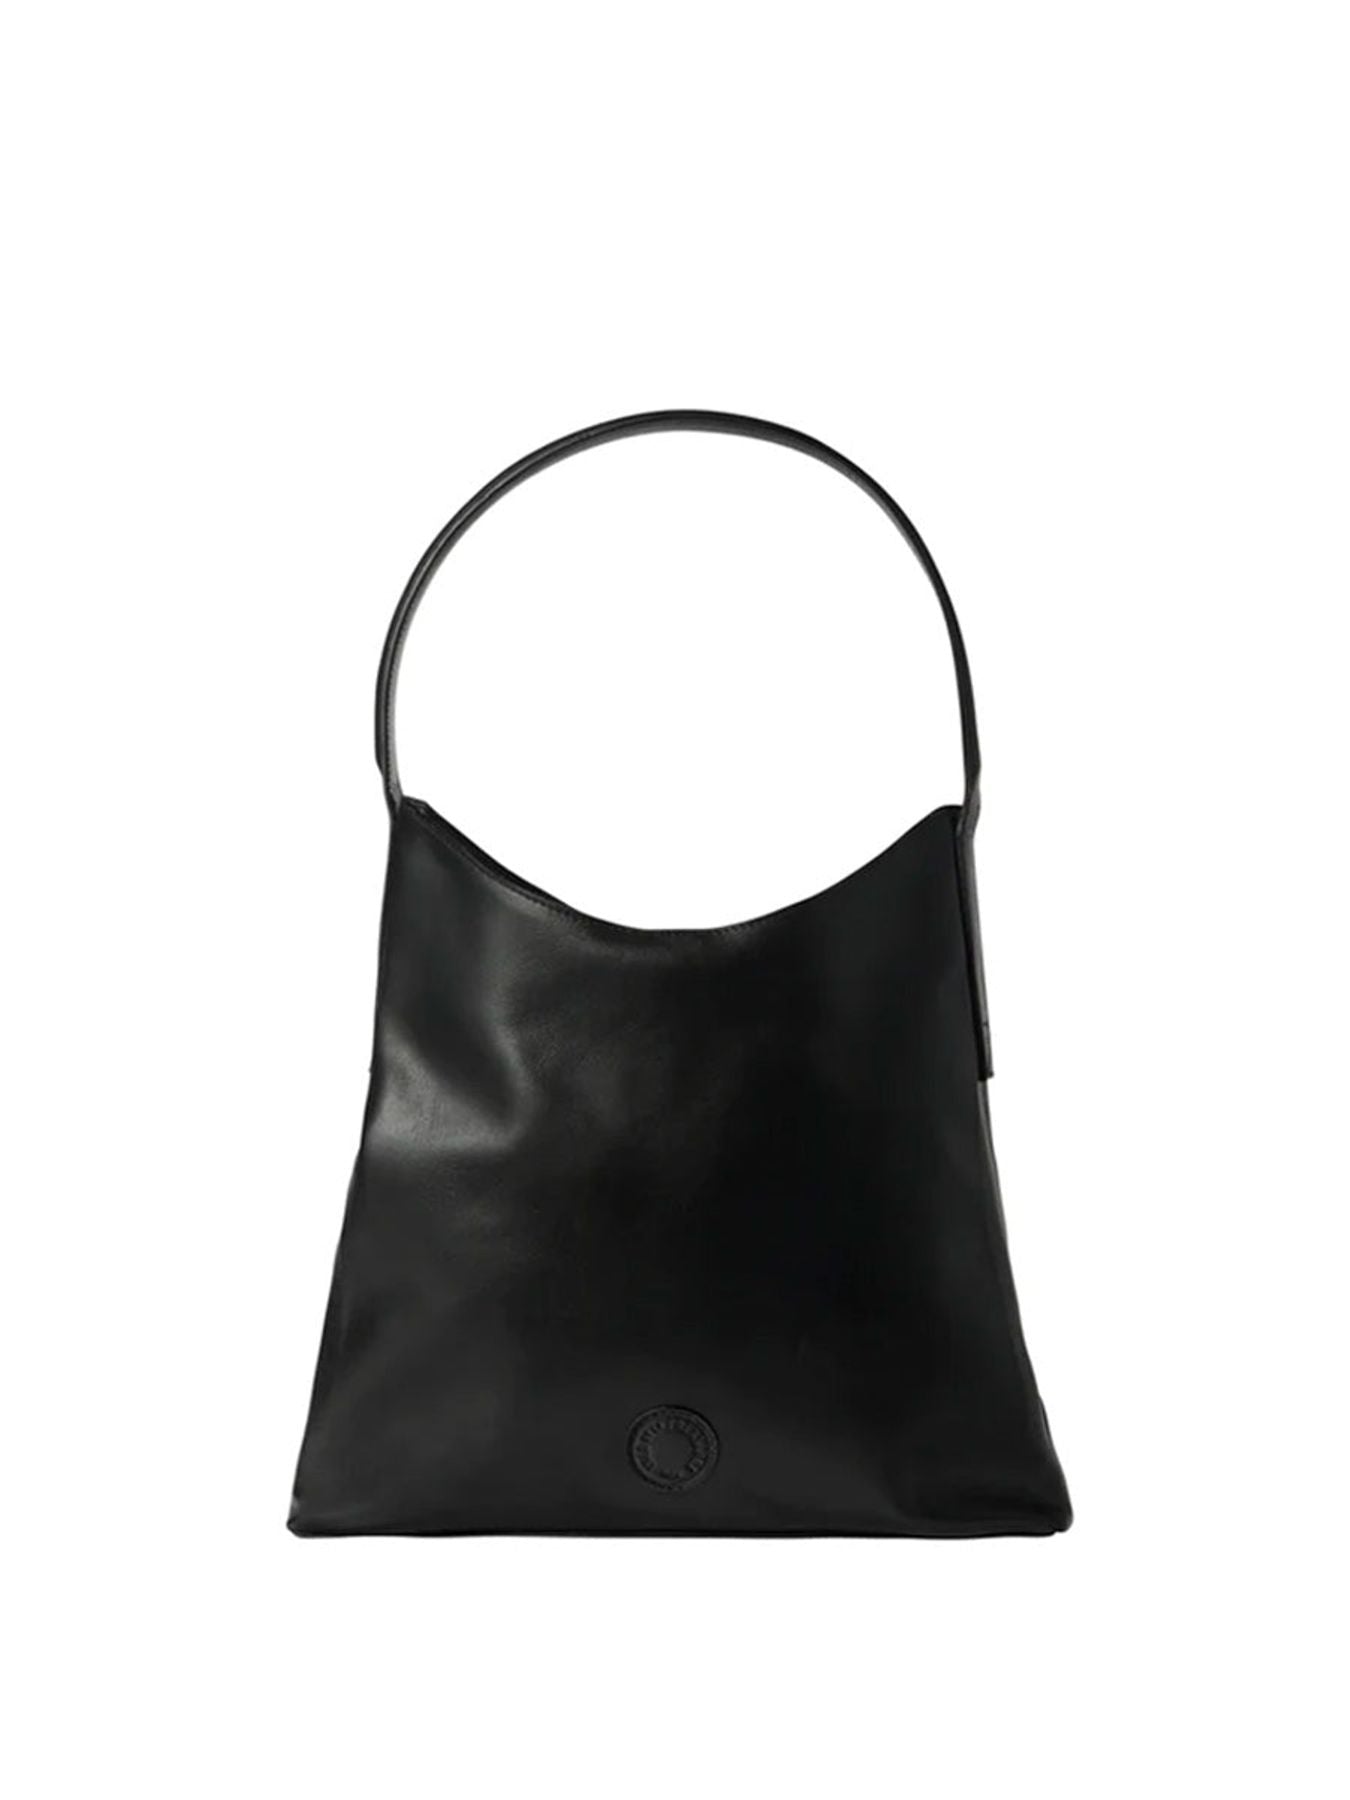 bag-leonore-m-leather-black